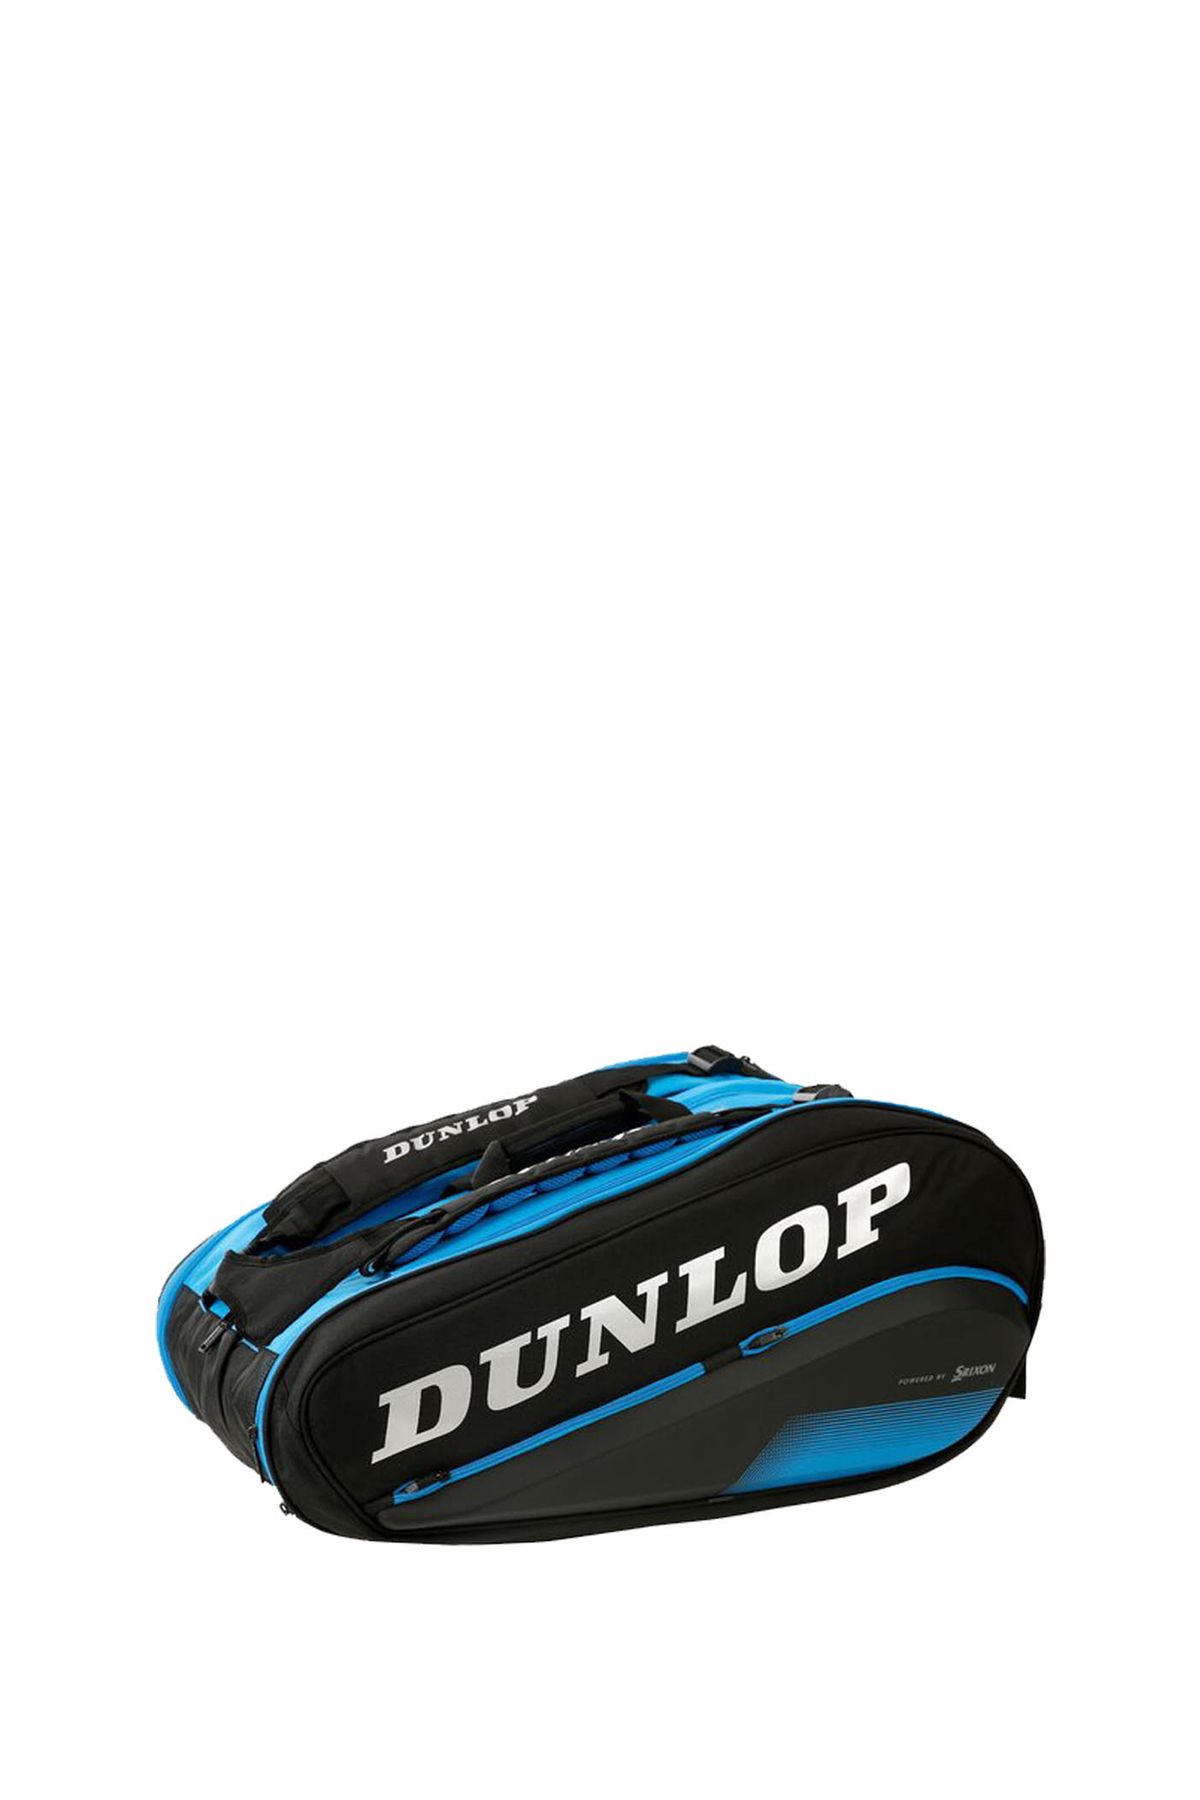 Dunlop FX Performance Thermo X12 Tenis Raketi Çantası